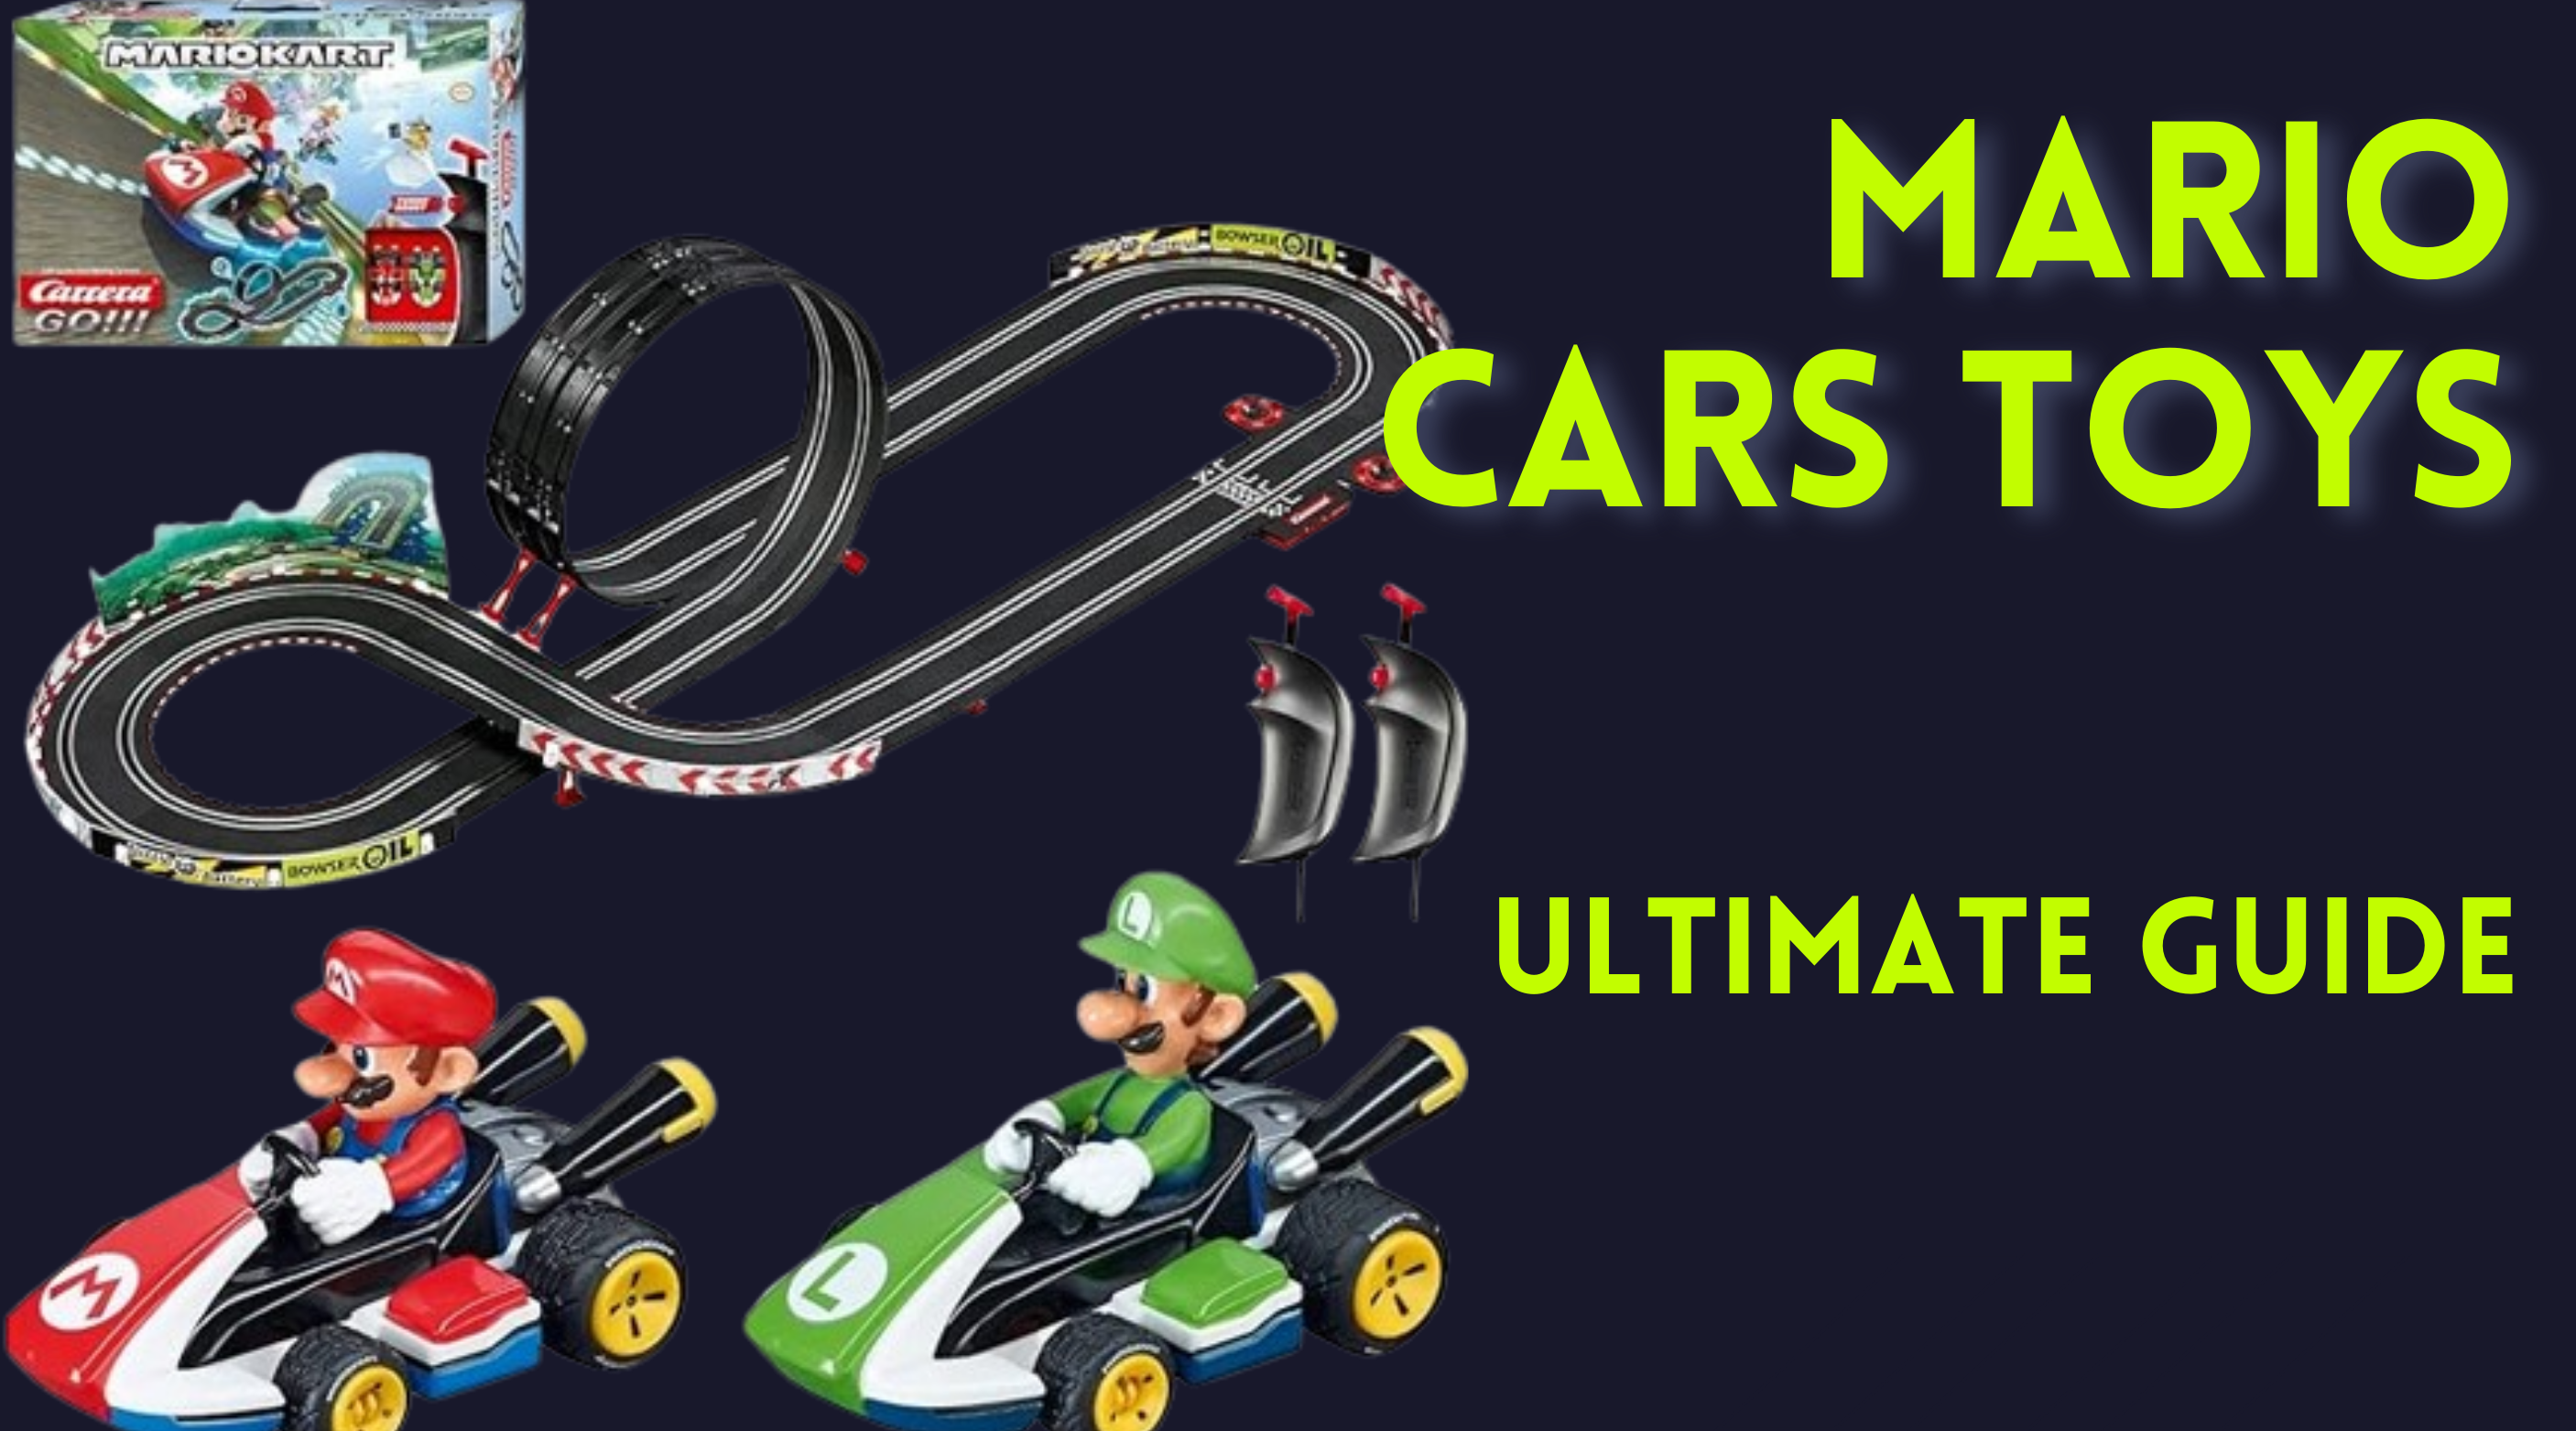 Mario Cars toys